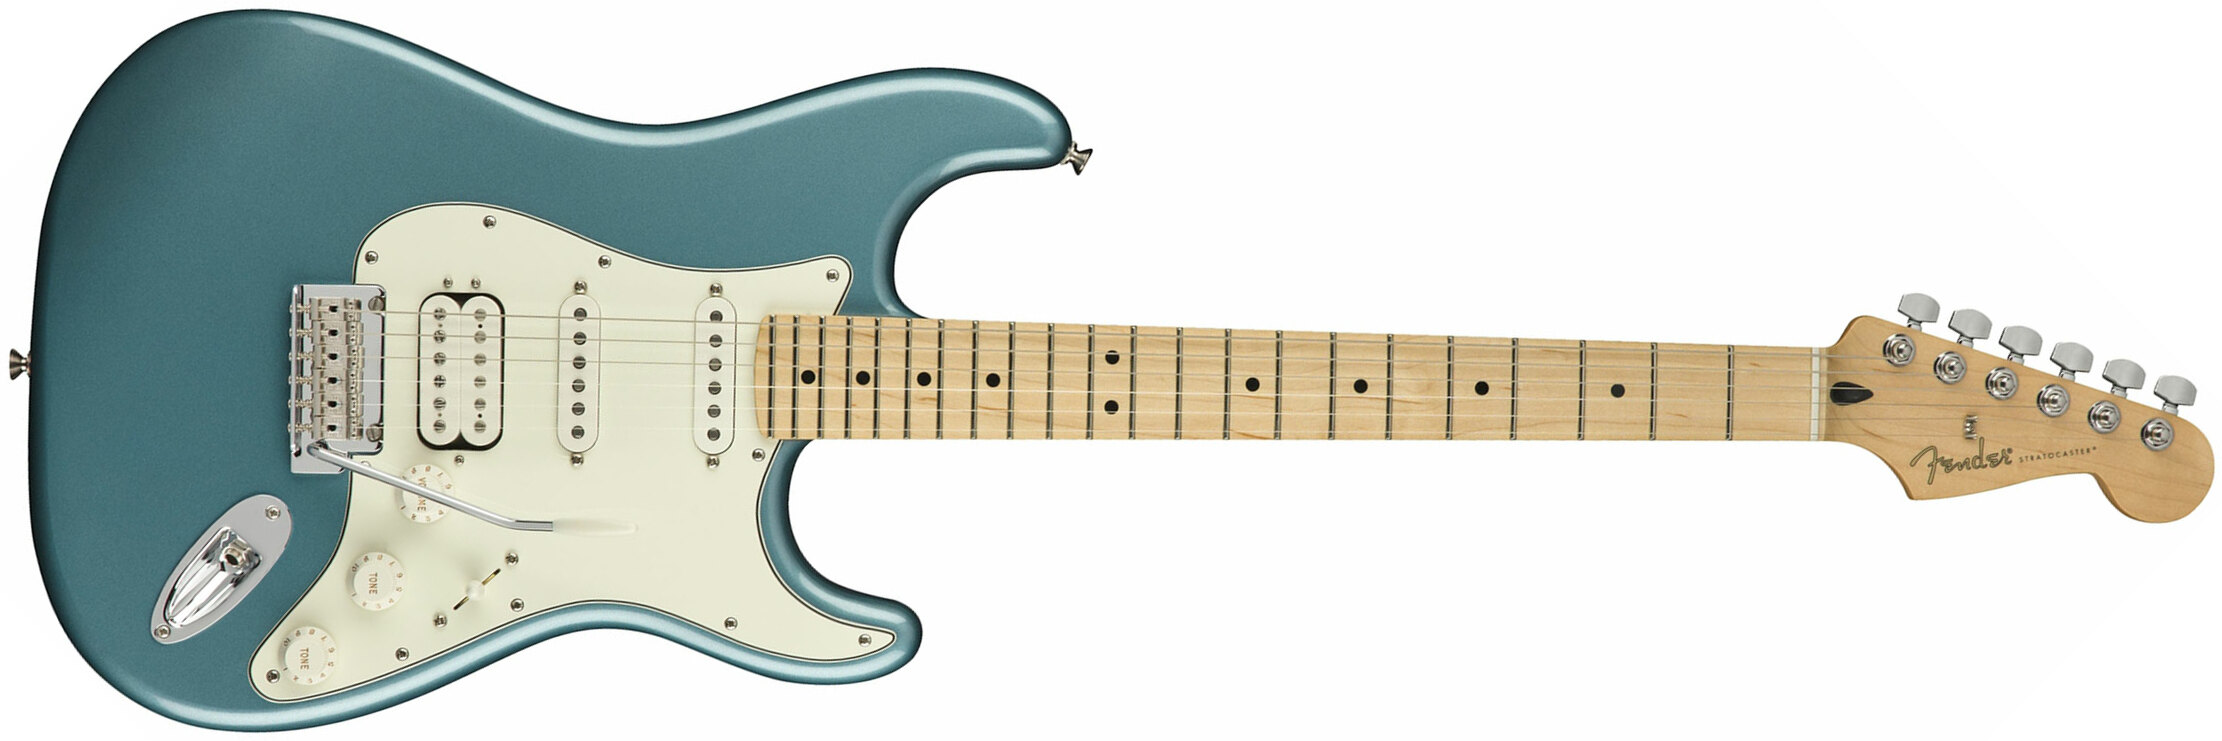 Fender Strat Player Mex Hss Mn - Tidepool - Str shape electric guitar - Main picture